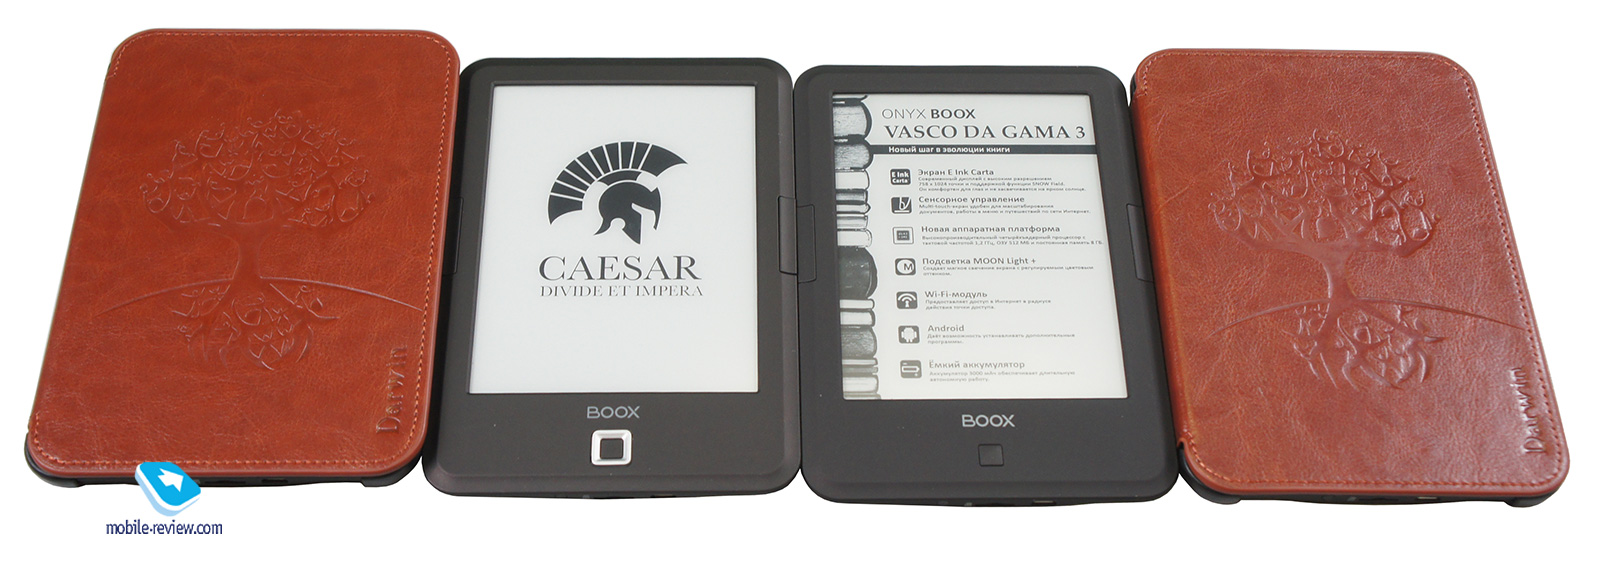 Cравнение четырех электронных книг ONYX: Caesar 3, Vasco Da Gama 3, Darwin 5 и Darwin 6